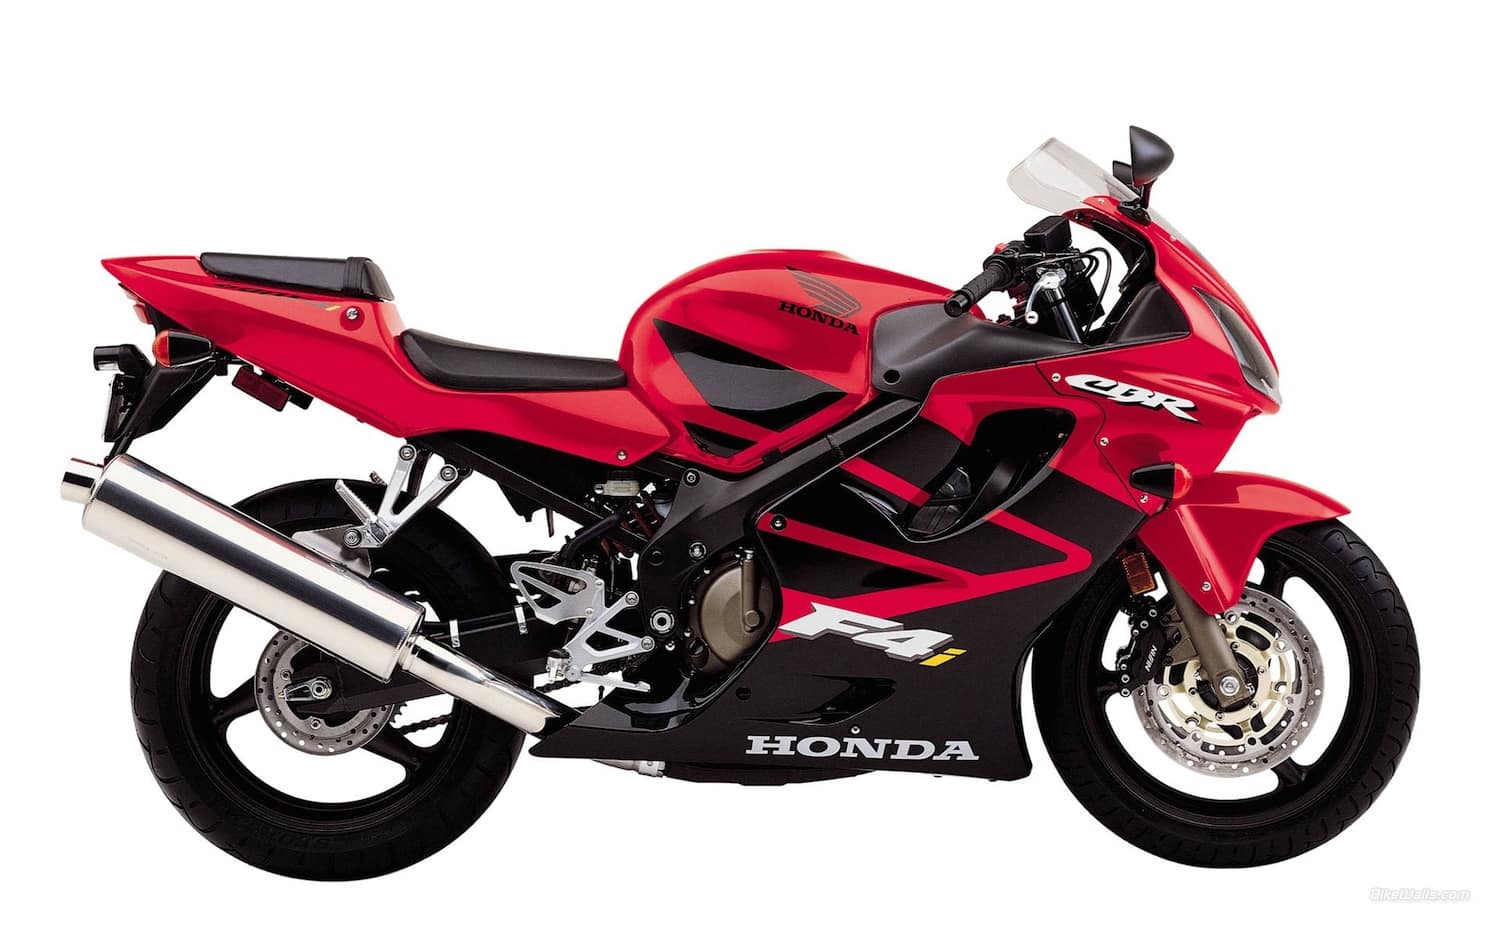 Honda CBR600F4i Black and red RHS studio image